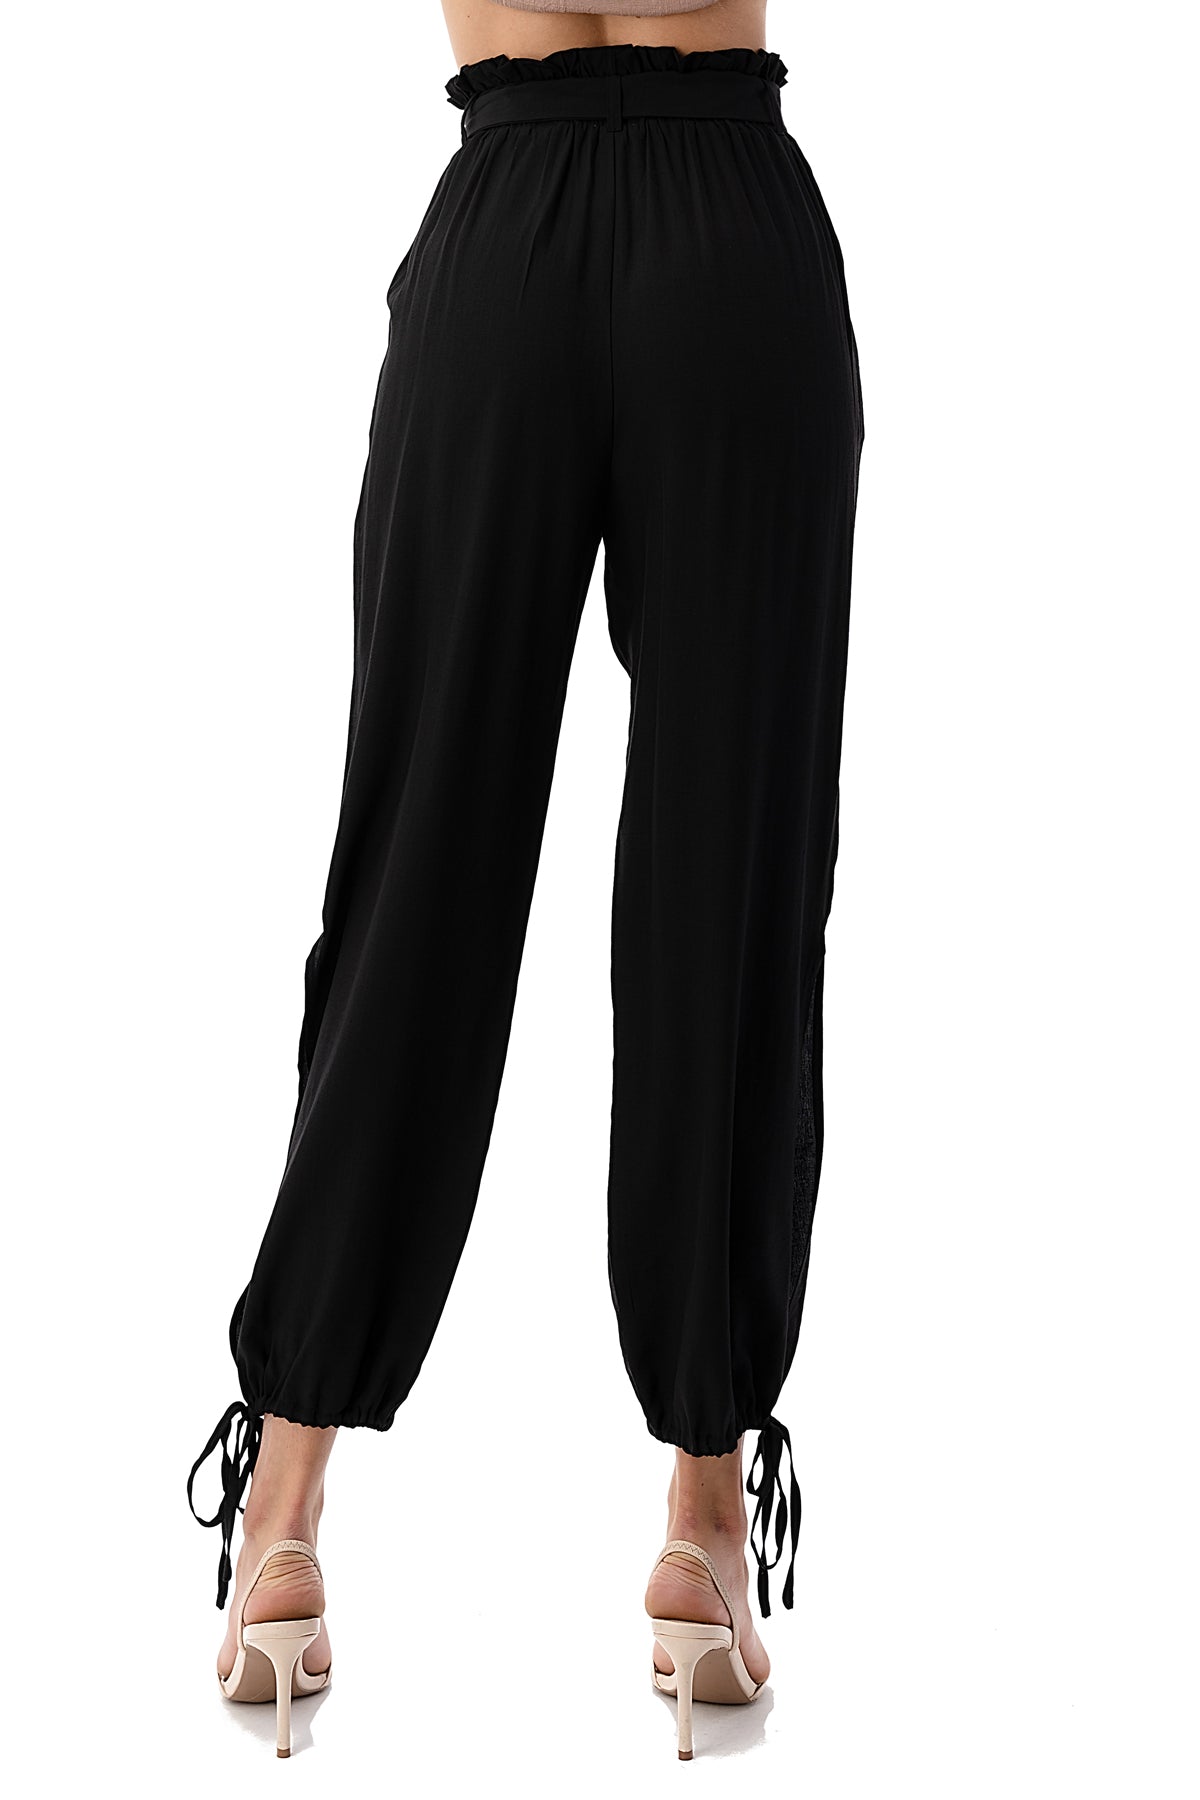 Cotton Linen Harem Pants for Women Eyelet Button Cutout Tapered Lounge  Pants Elastic Waist Ruffle Cinch Bottom Pants Black : : Clothing,  Shoes & Accessories